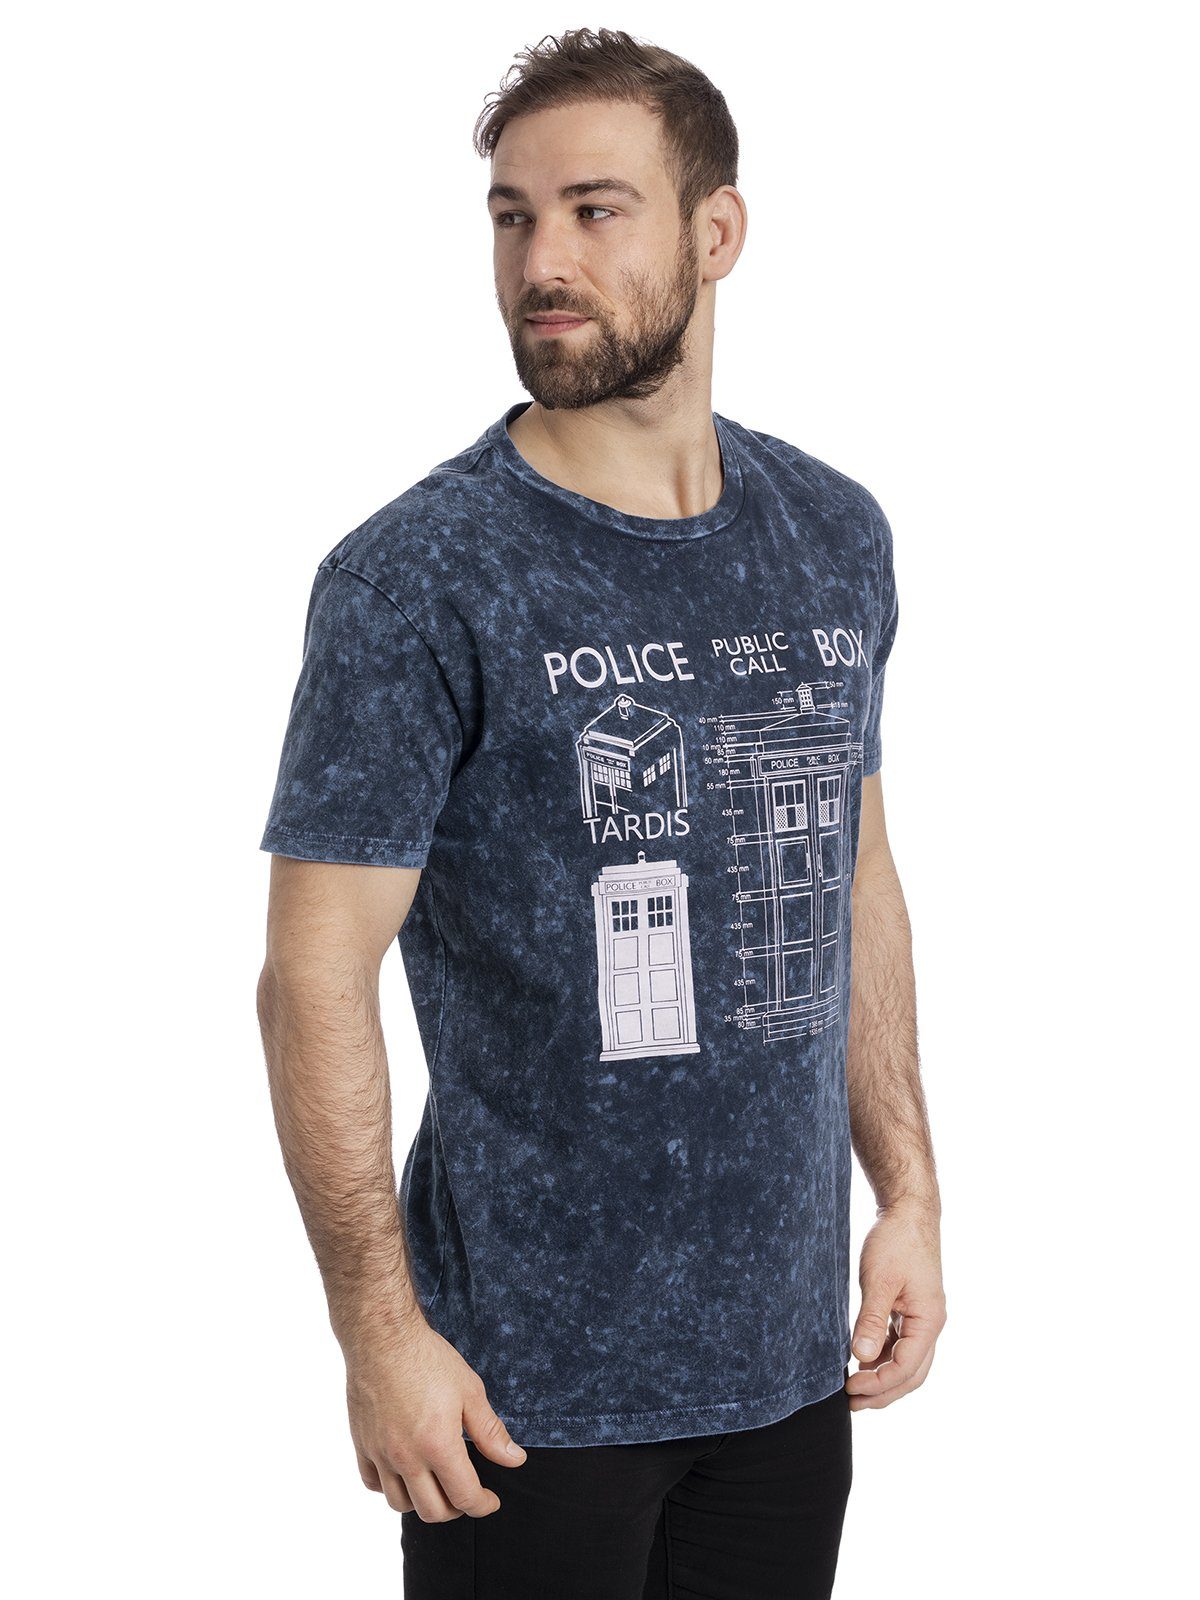 T-Shirt Doctor Nastrovje Box Blueprint Police Batik Potsdam Who